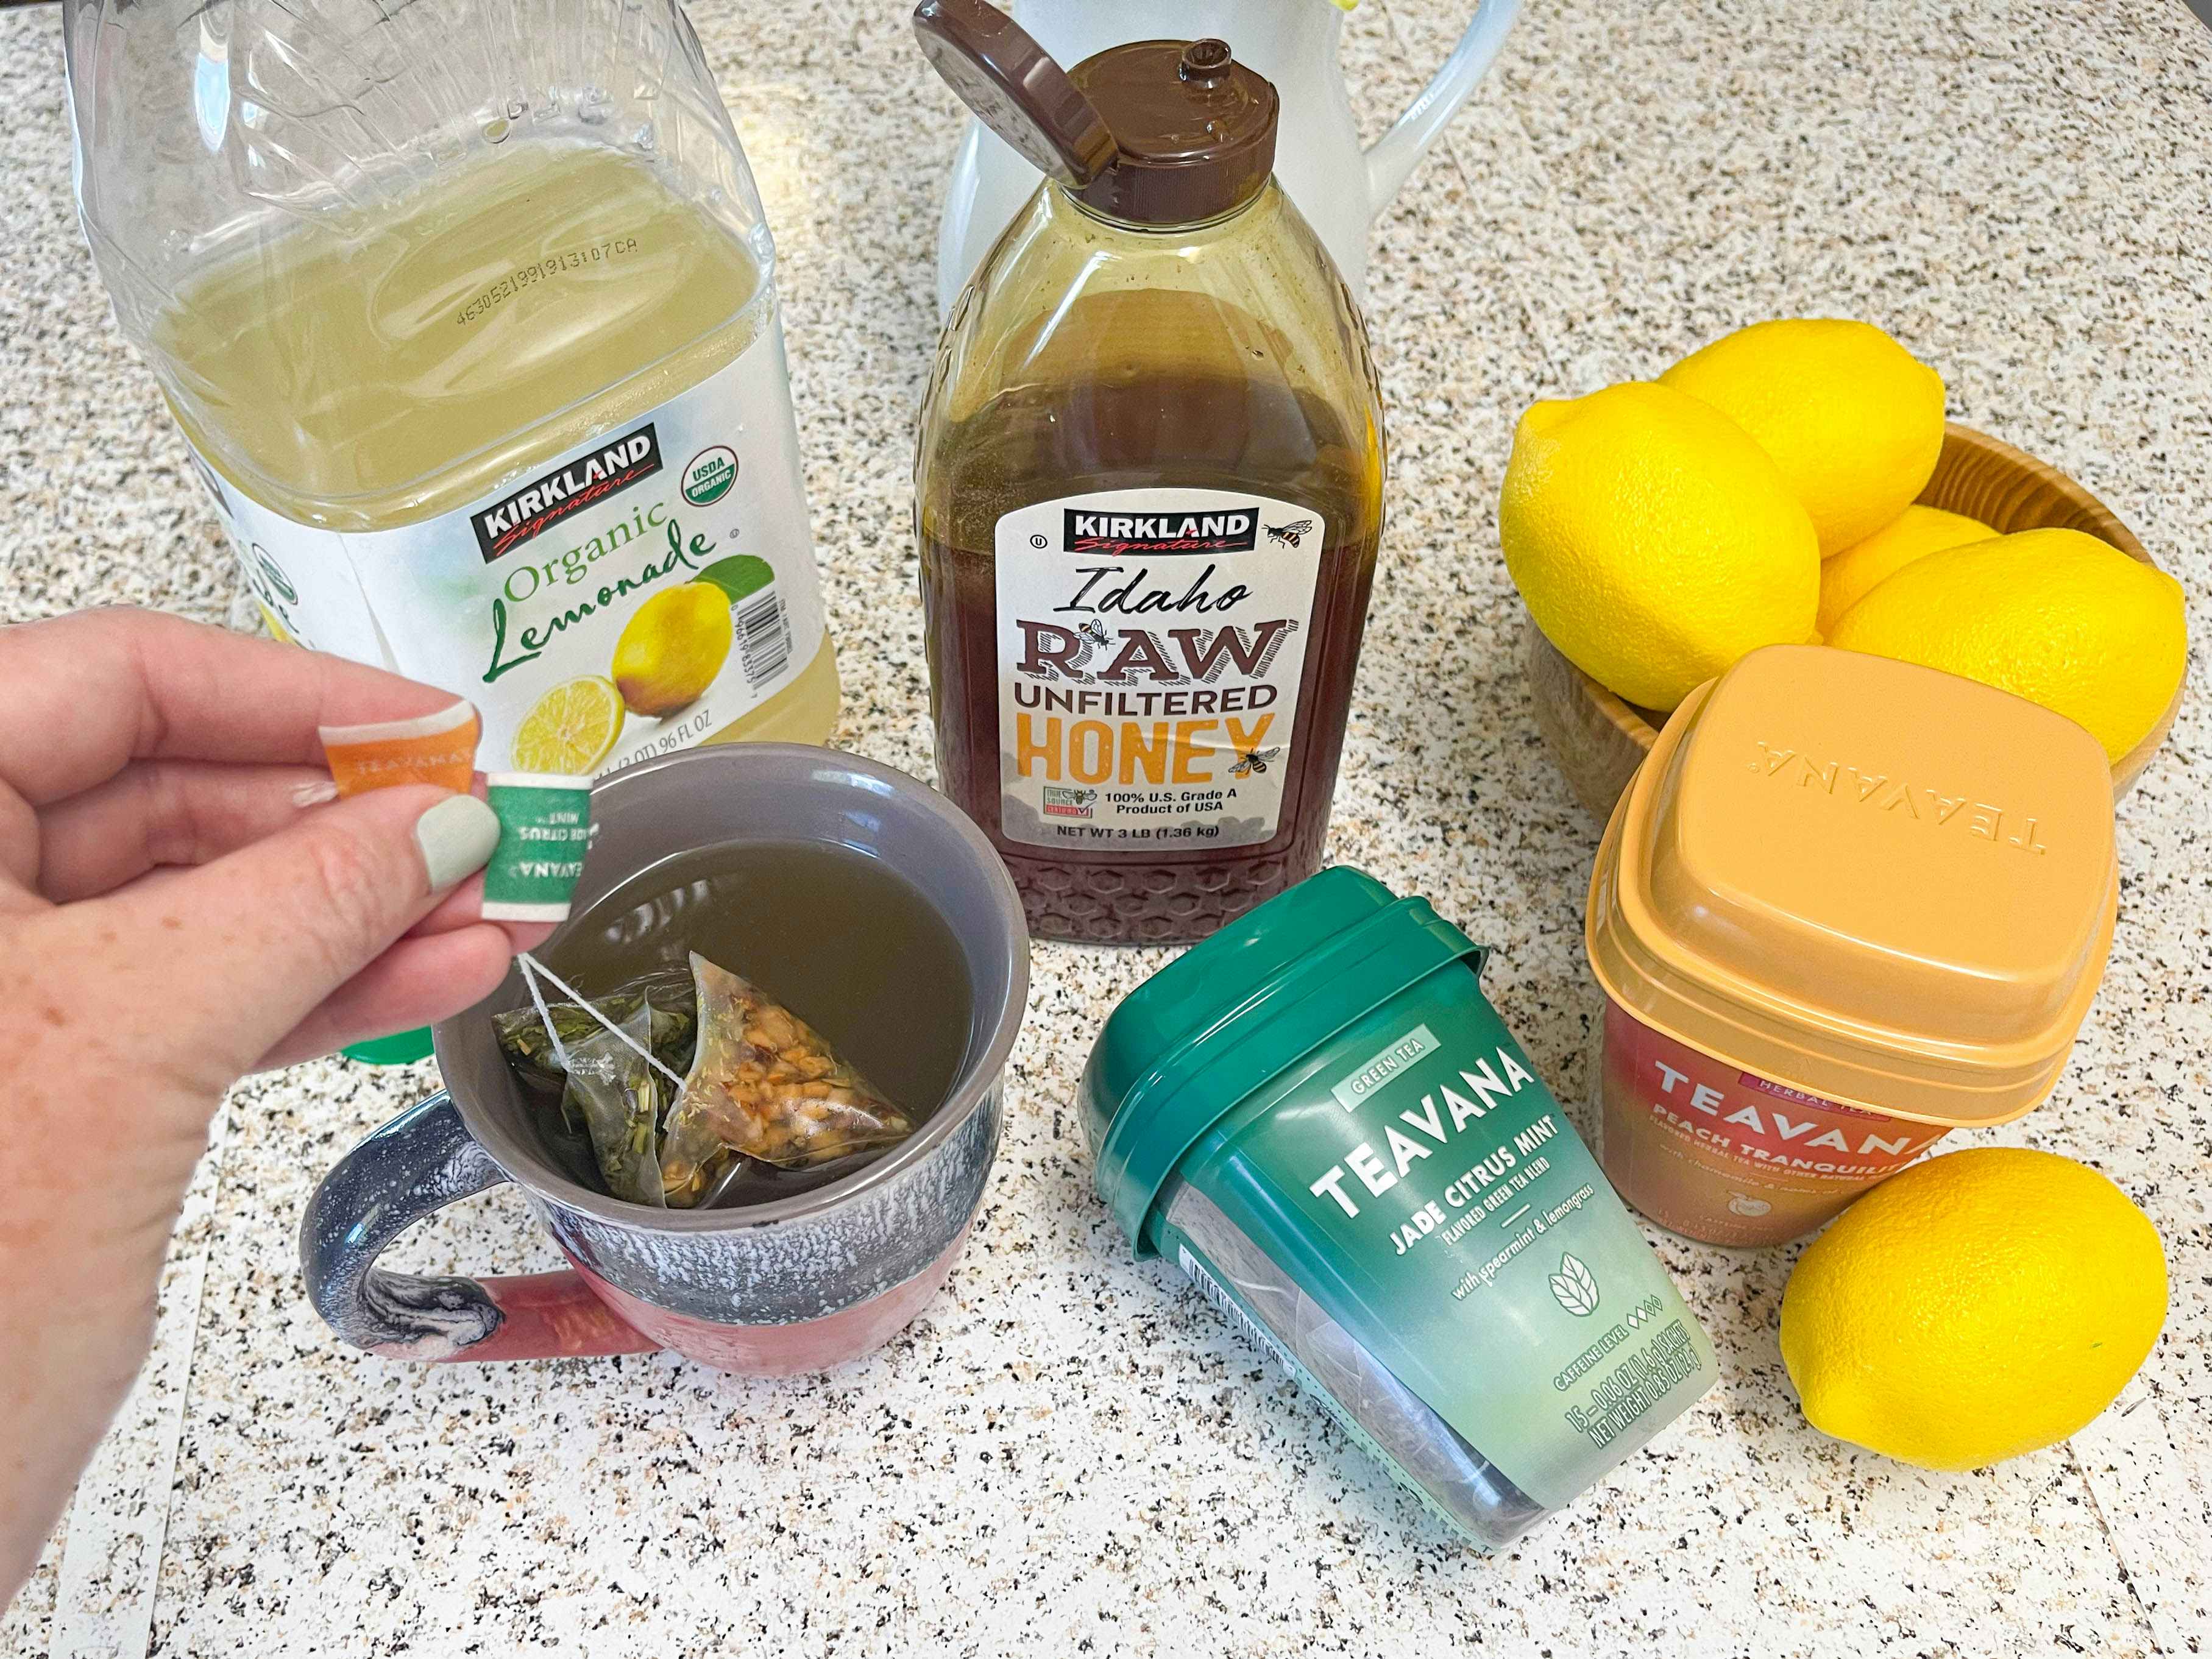 diy starbucks medicine ball drink with tea, honey, and lemonade on counter